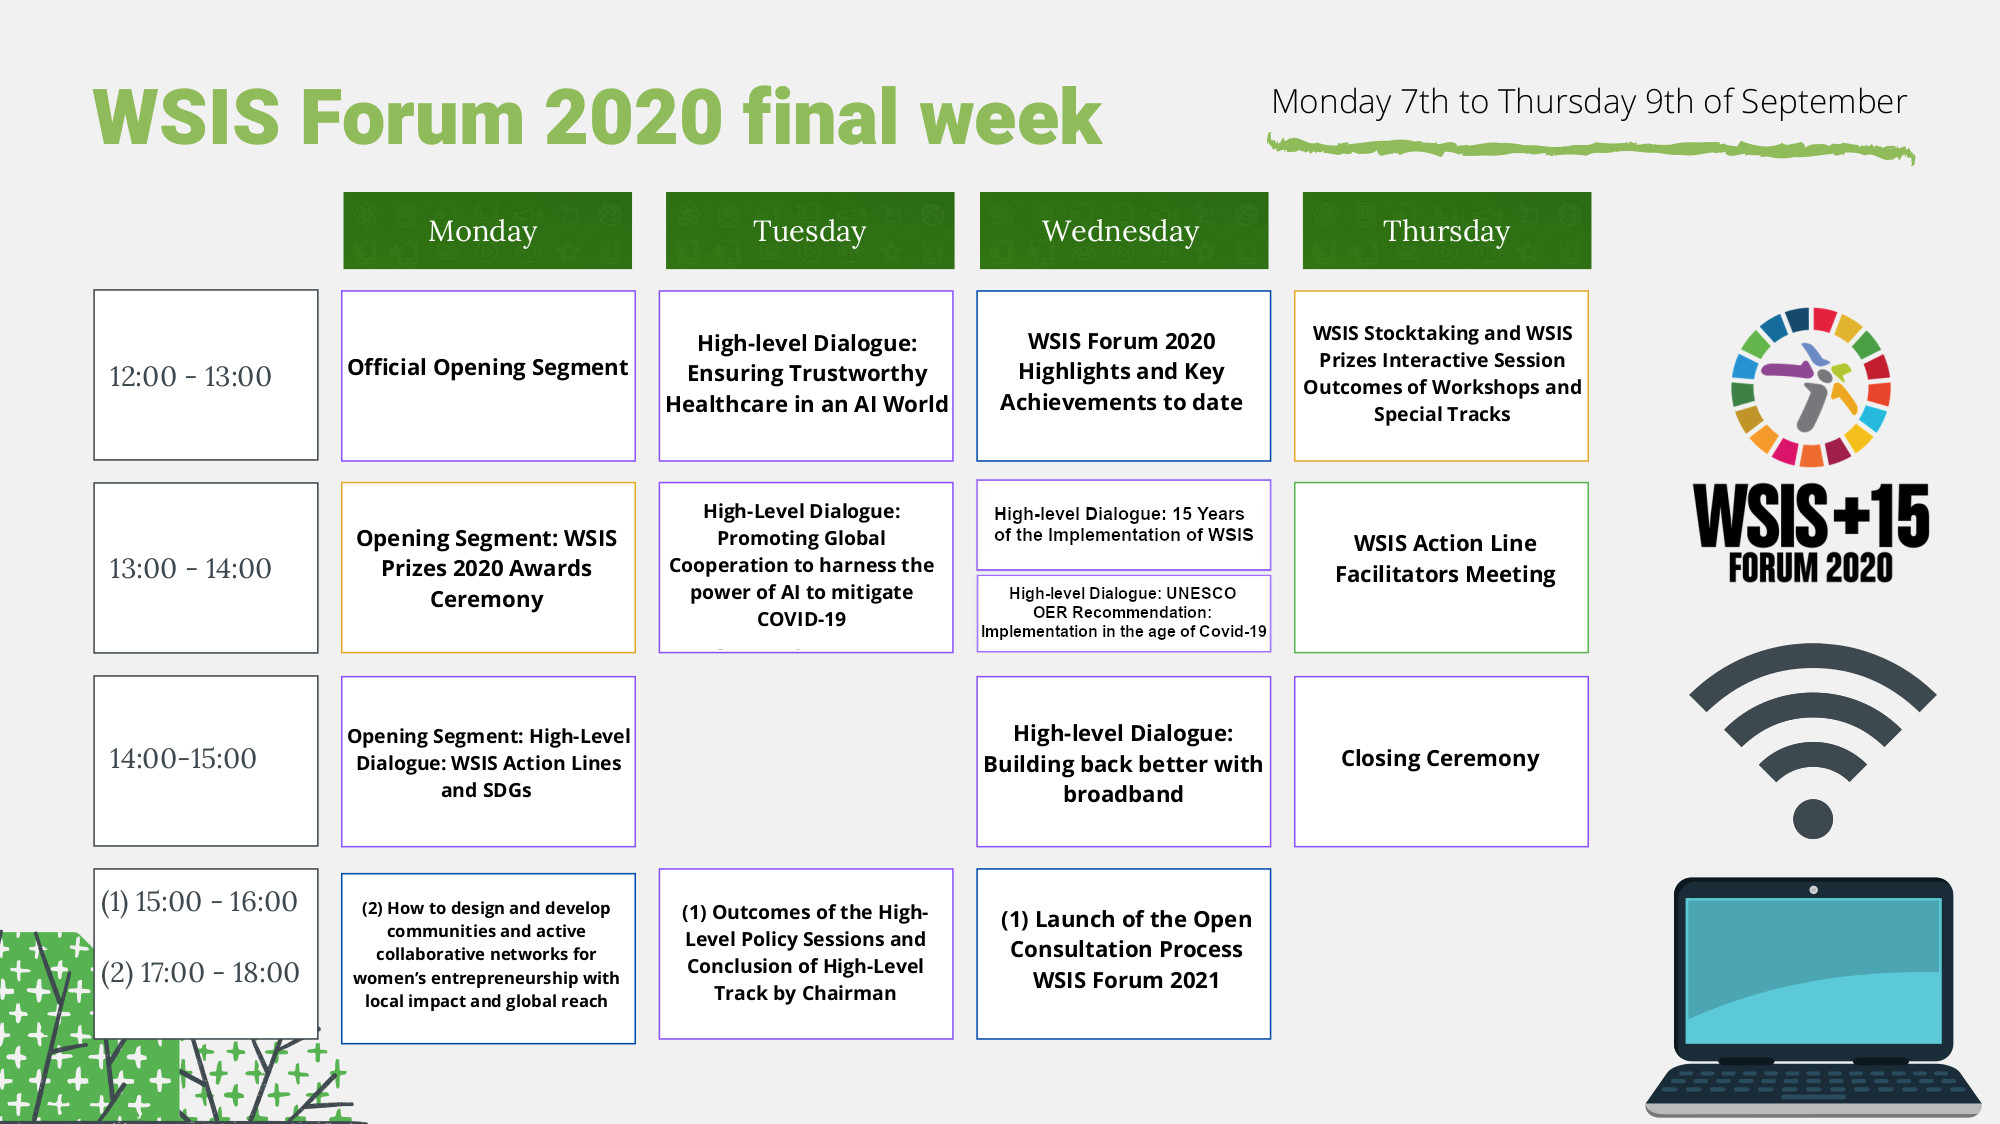 WSIS Forum 2020 Final Week Agenda